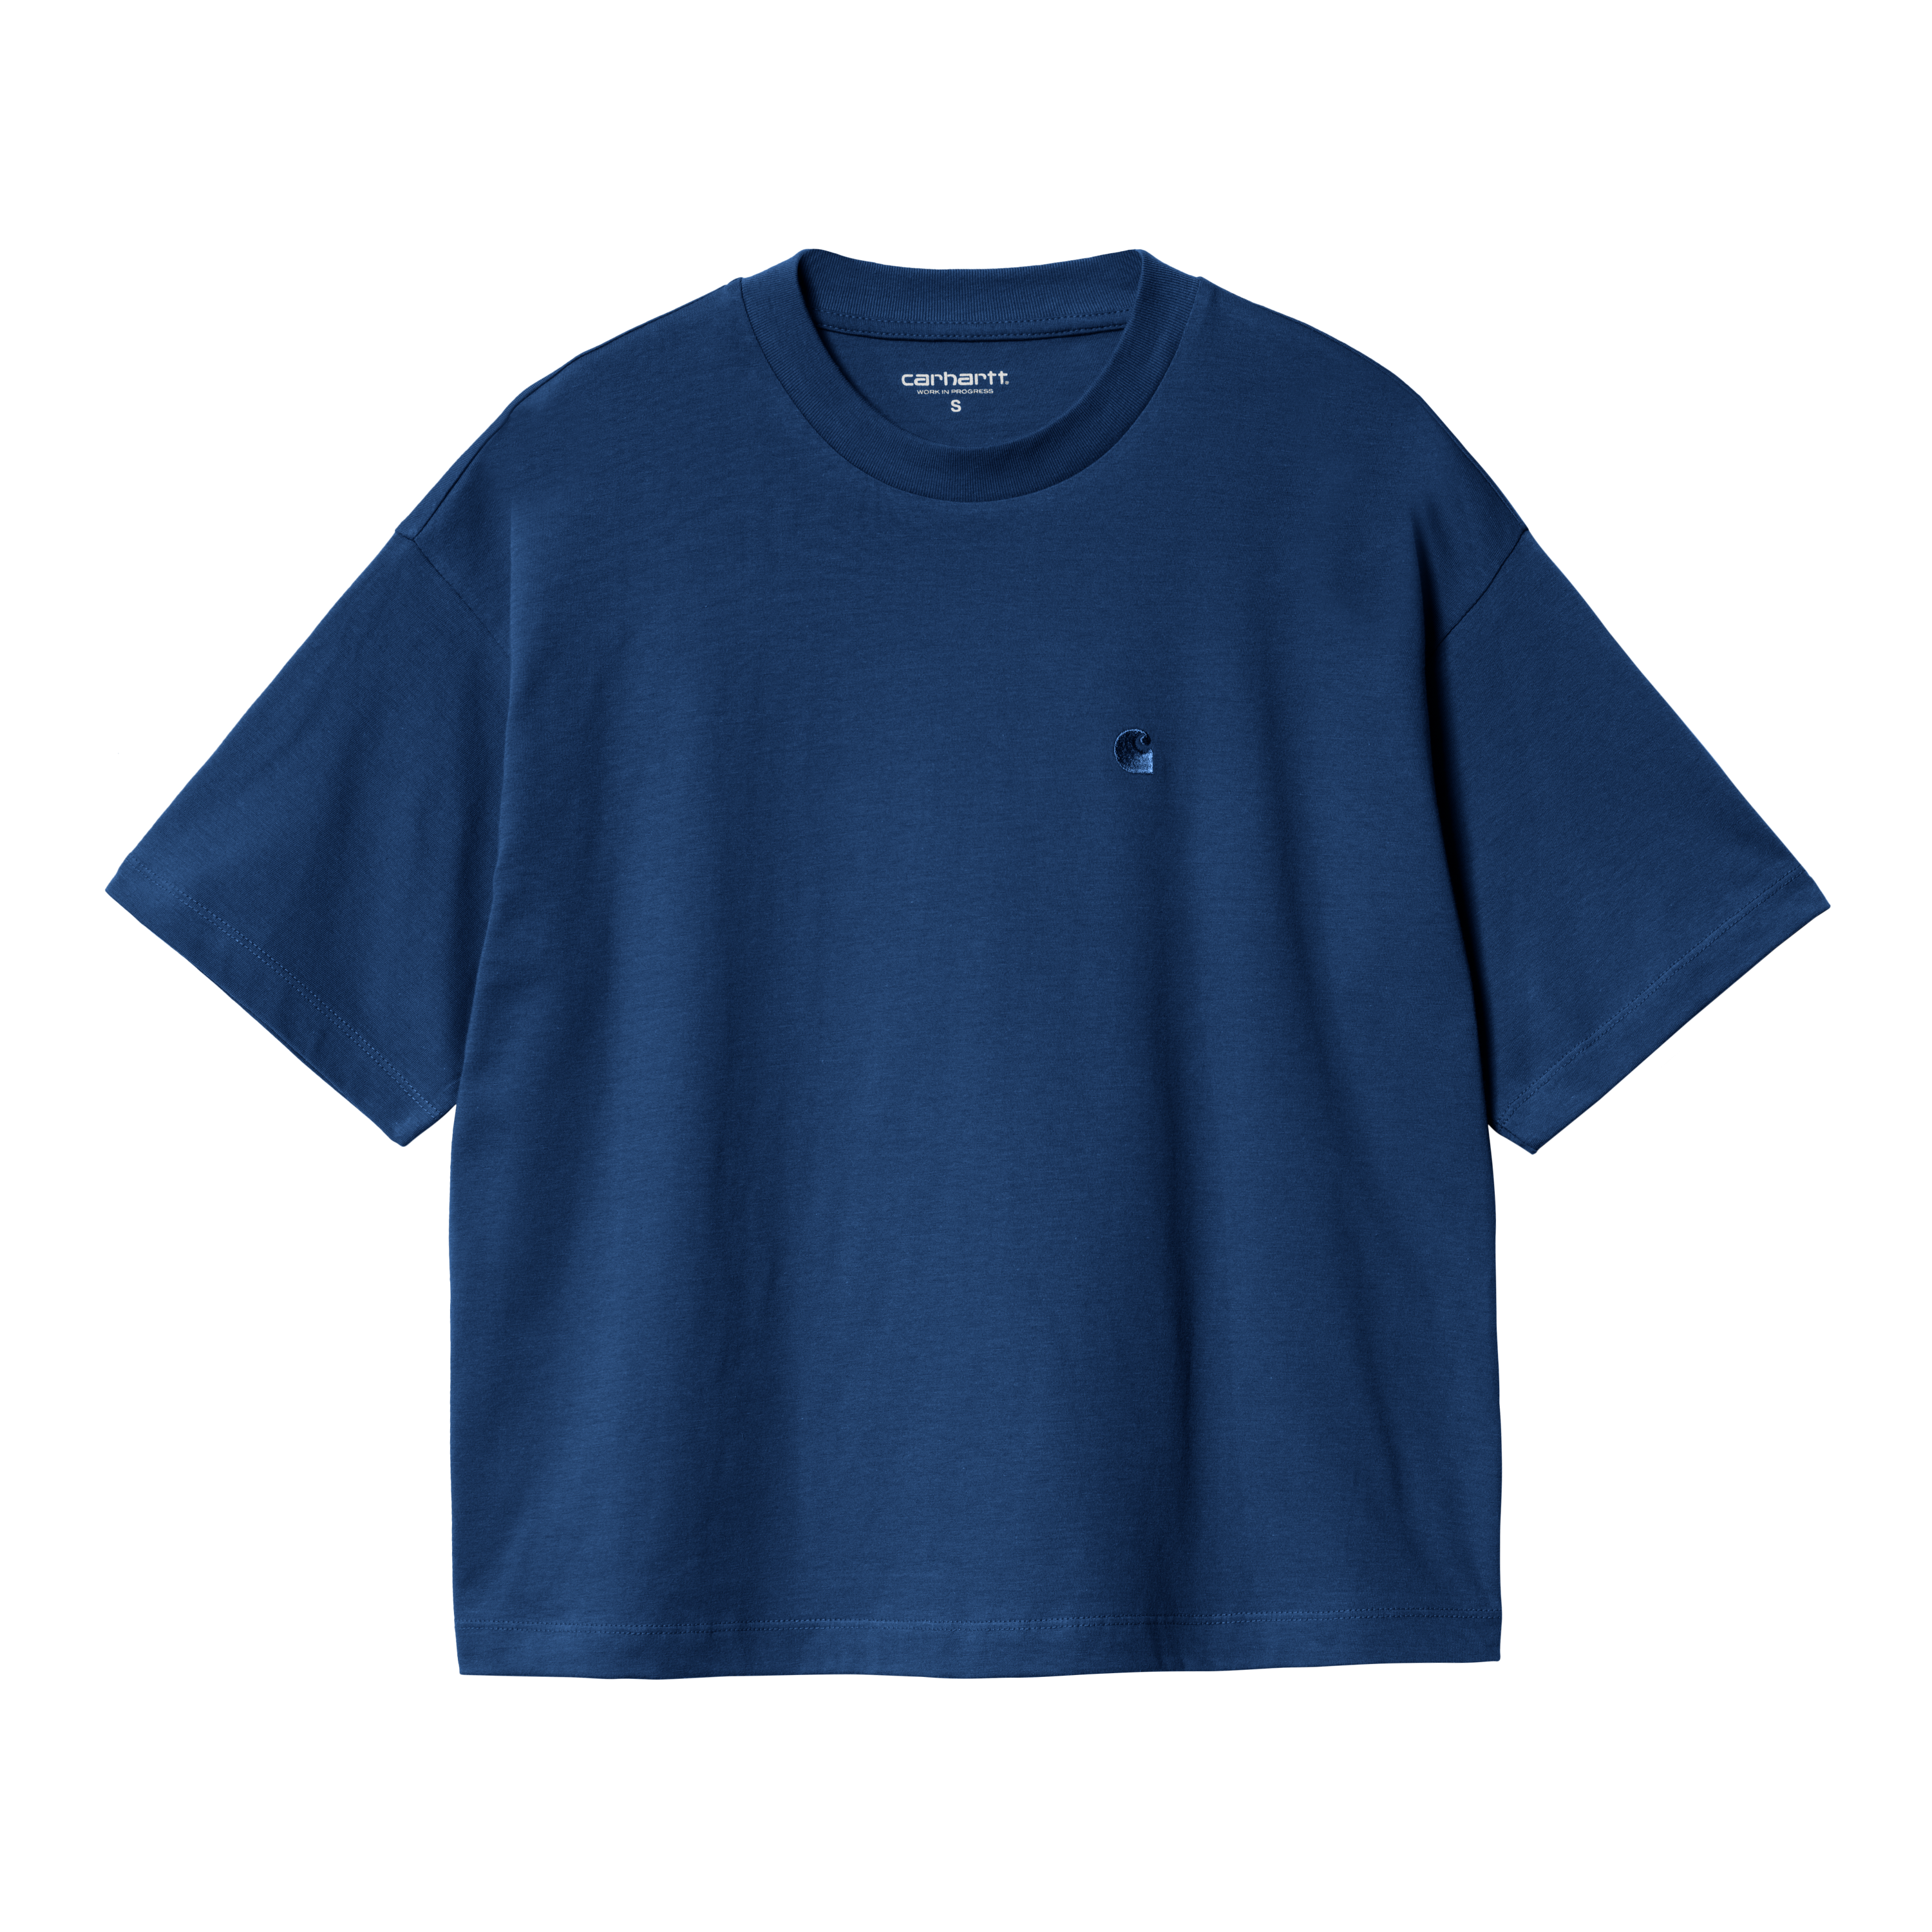 Carhartt WIP Women’s Short Sleeve Chester T-Shirt in Blau